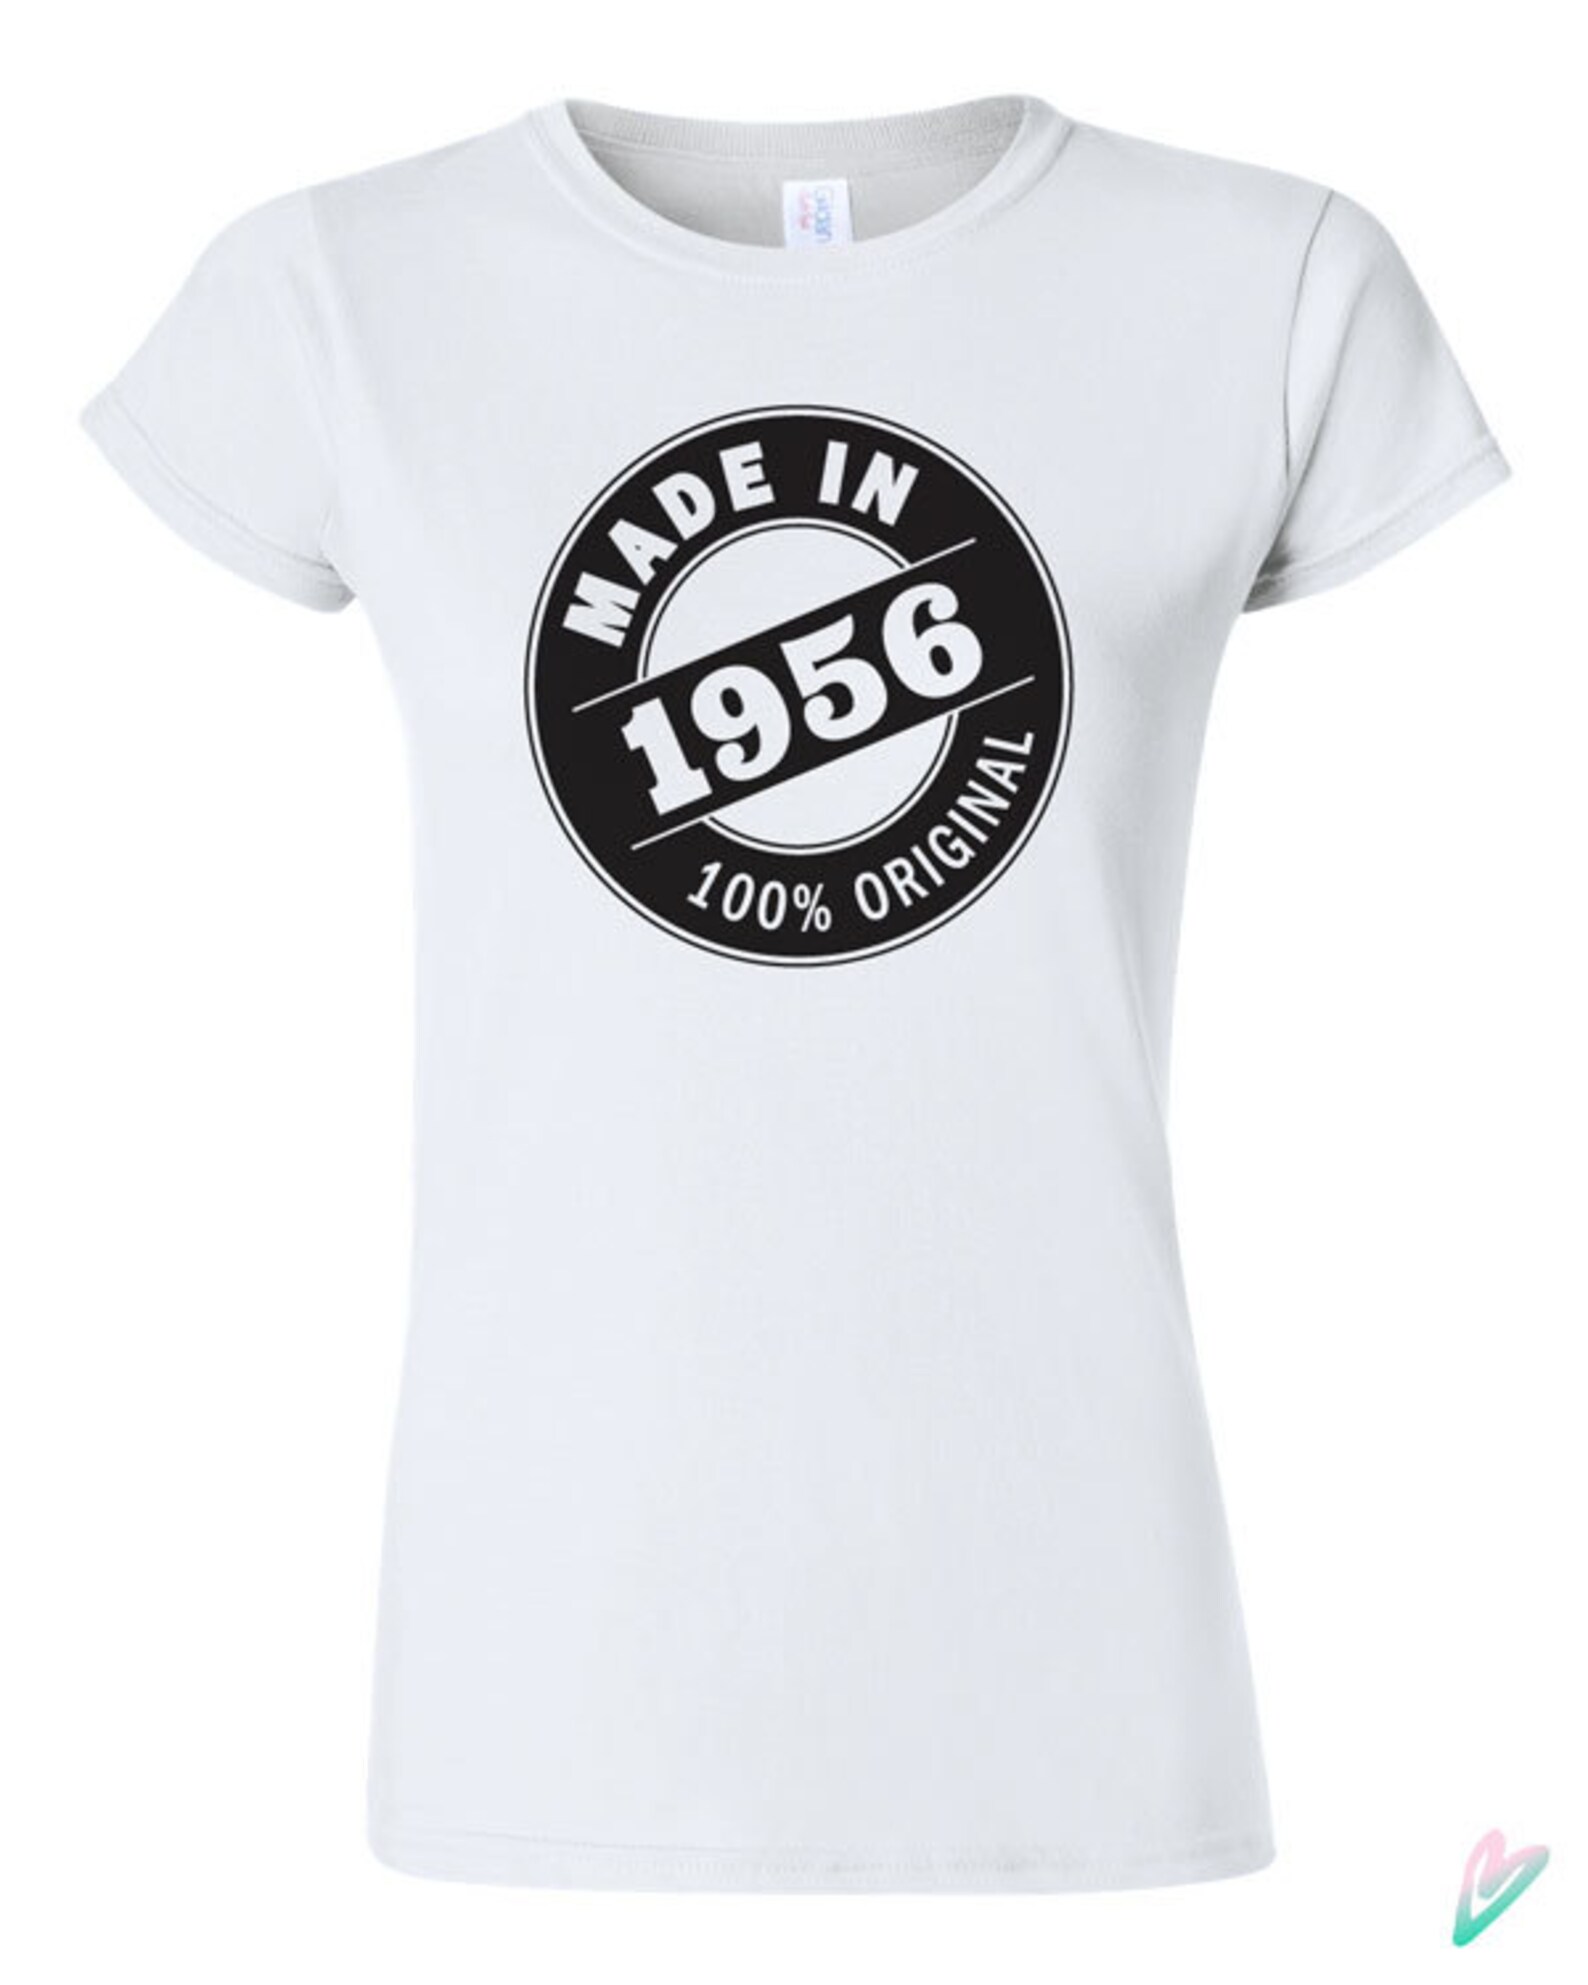 Made in 1958 60th Birthday Gift T-shirt Tshirt Tee Shirt 100% | Etsy